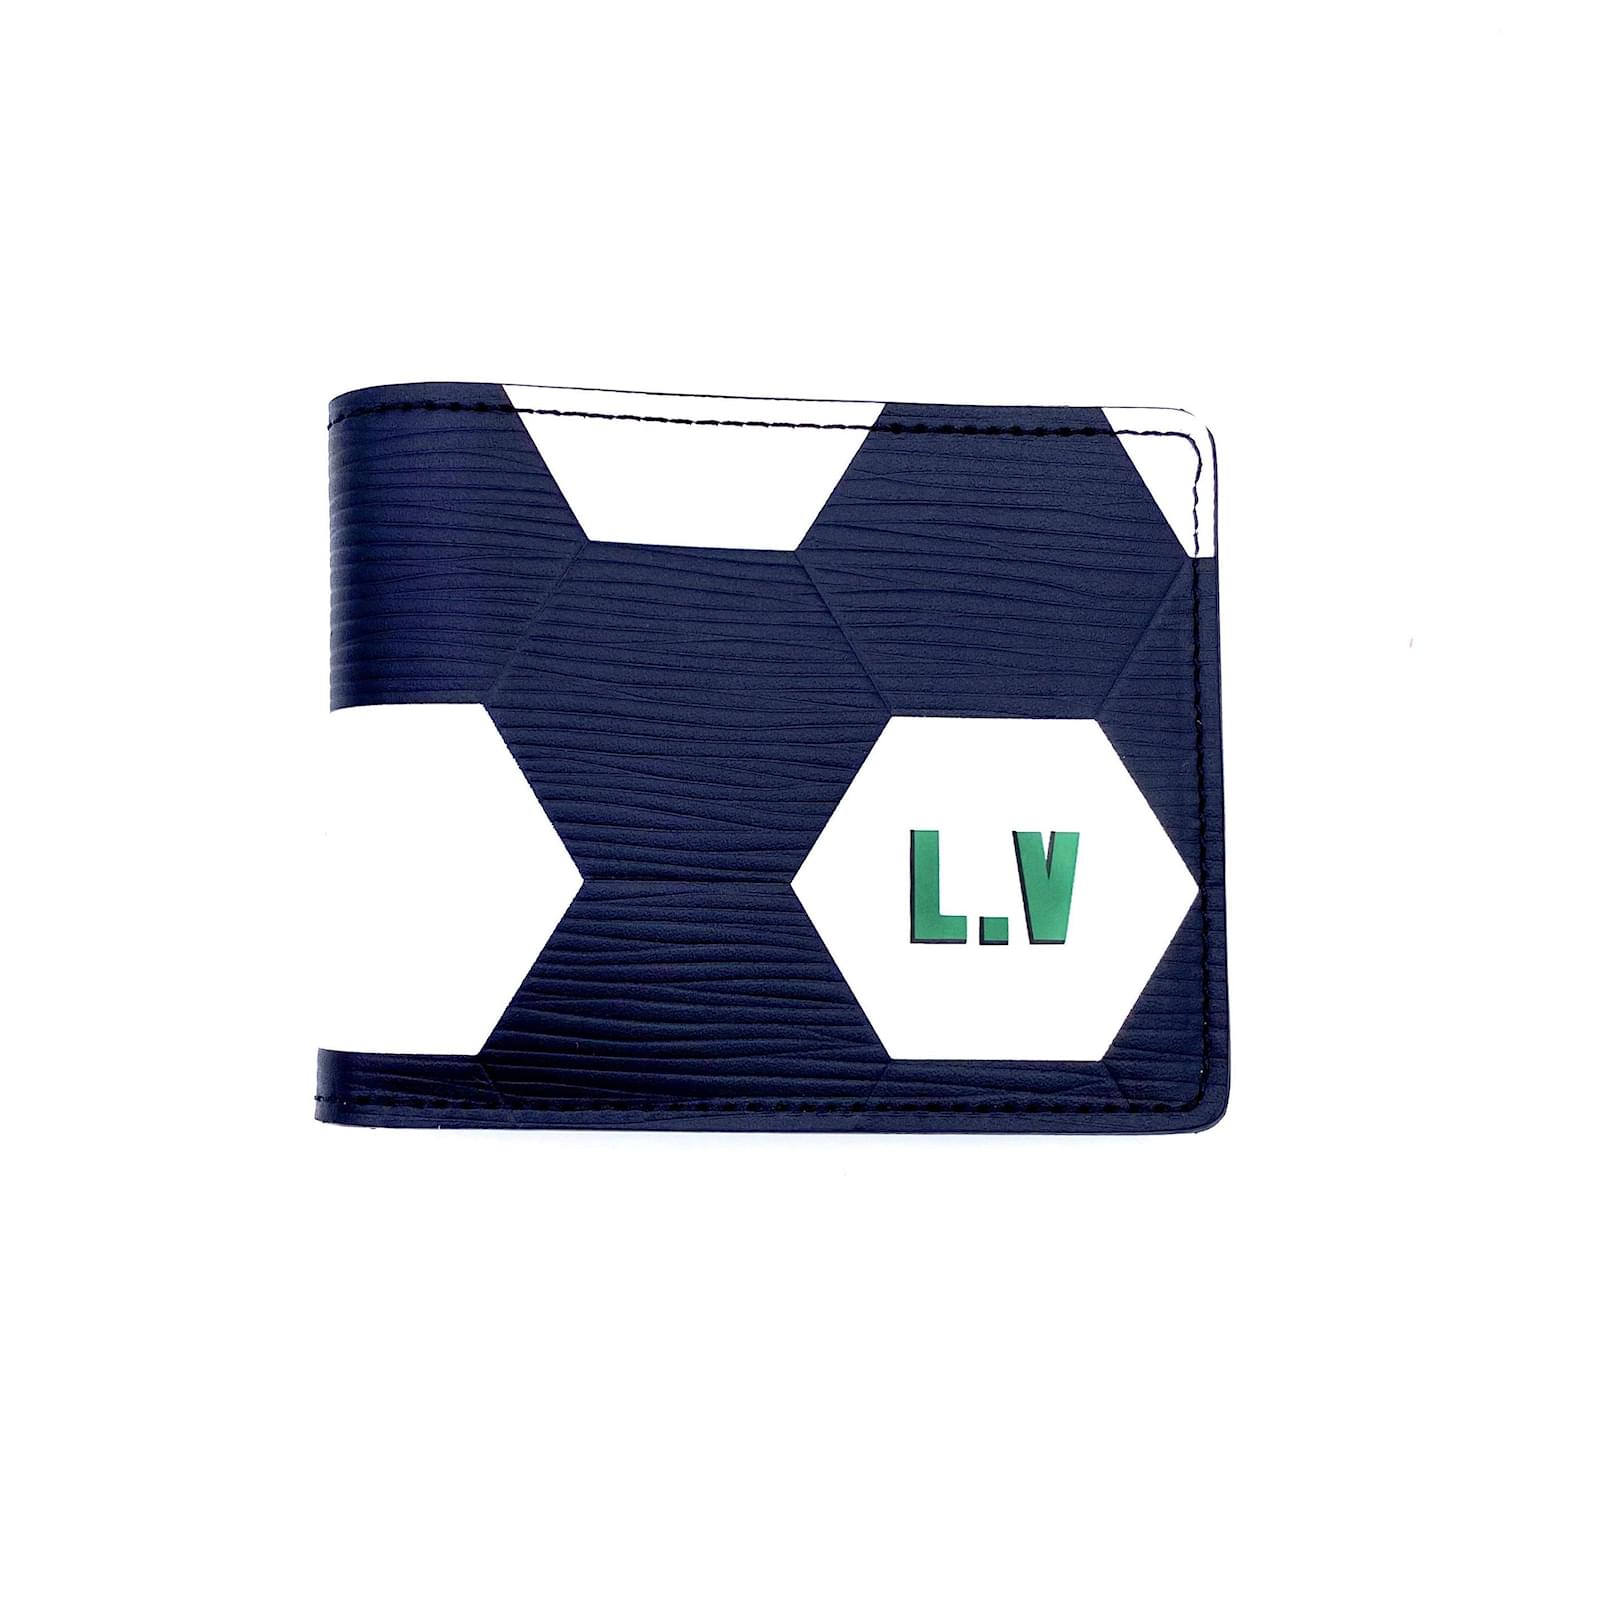 Louis Vuitton Epi Leather Slender Wallet Louis Vuitton